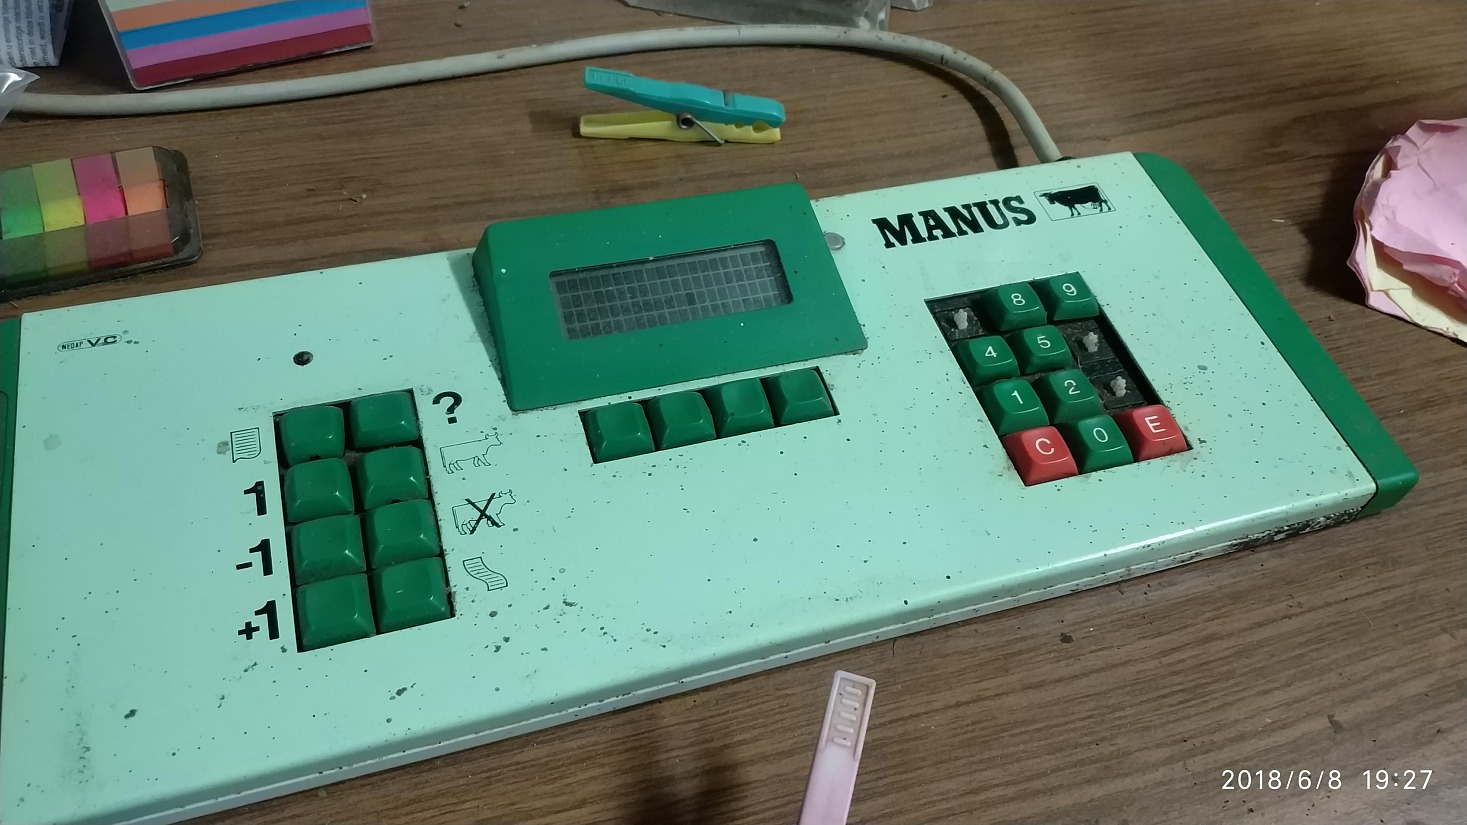 manus keyboard 8b035 s1467x825